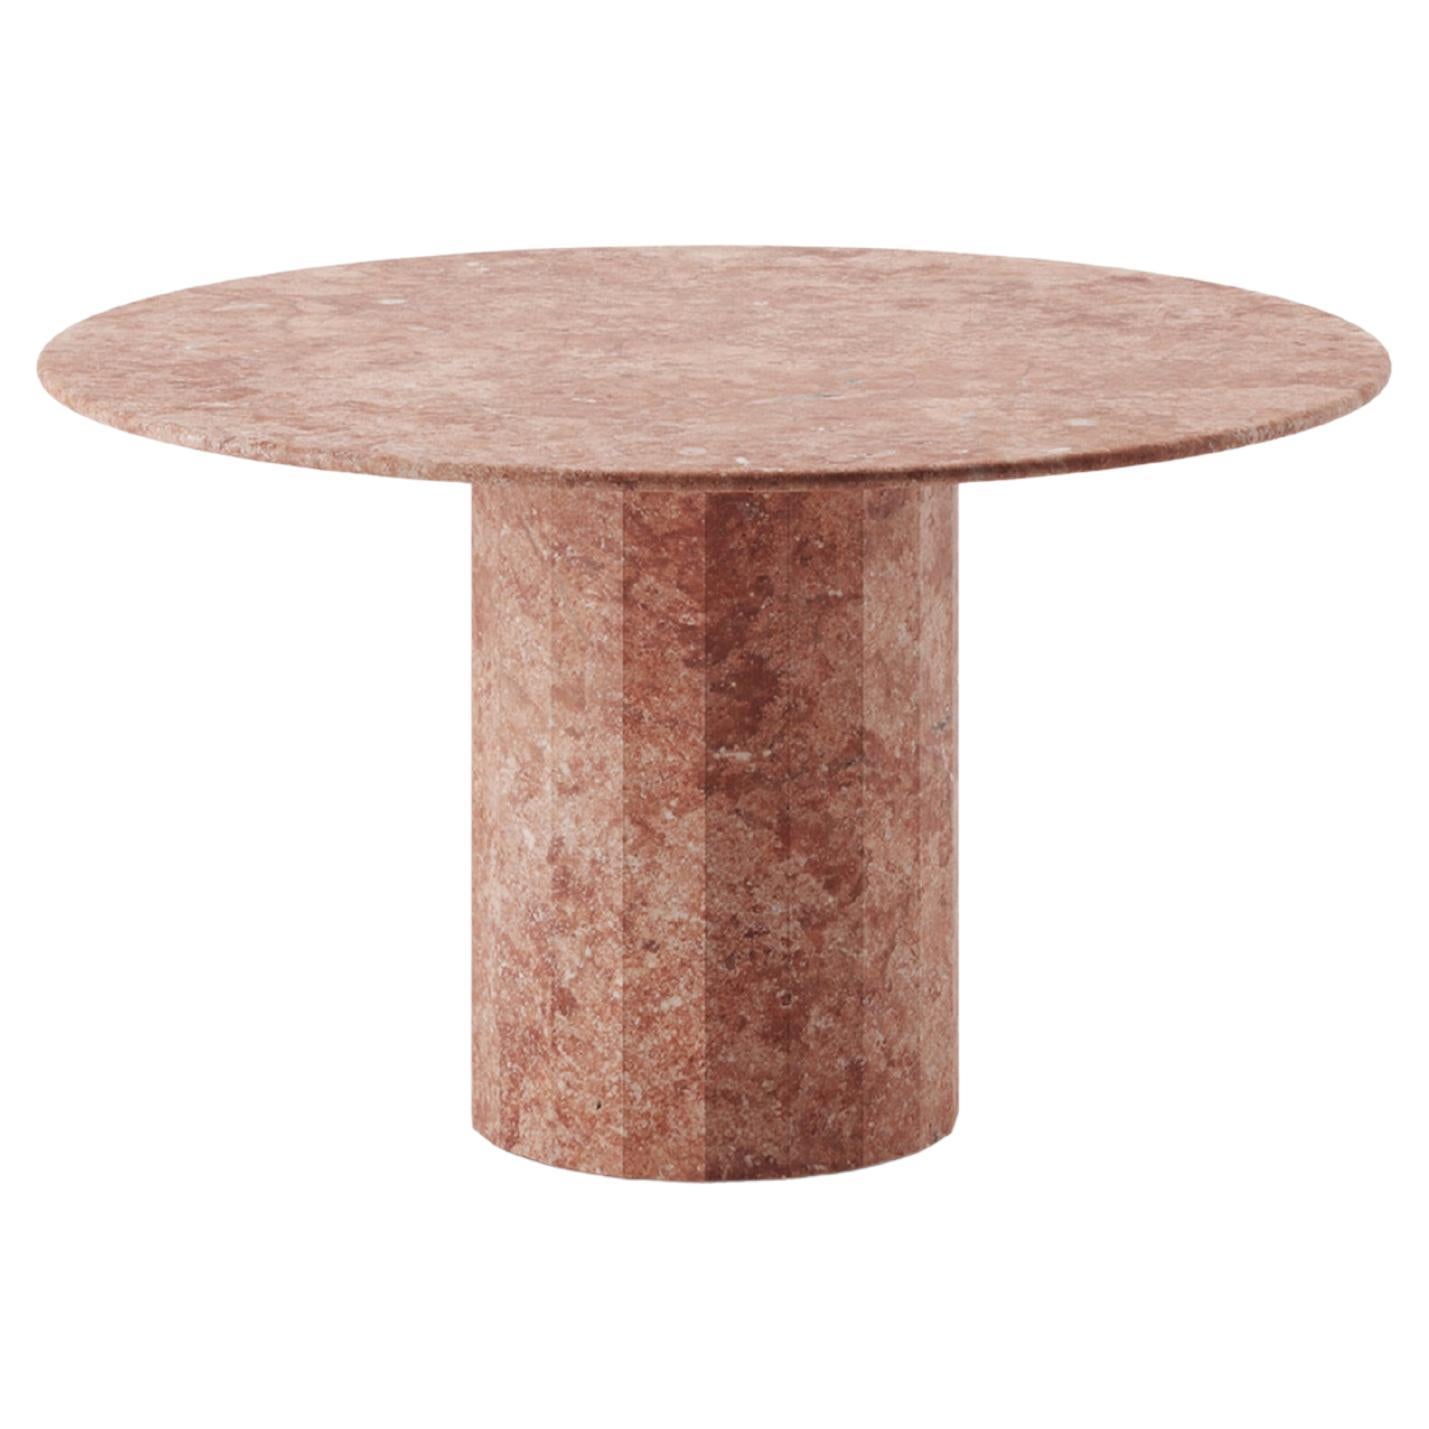 Palladian 130cm/51.2" Round Table in Red/Pink Travertine 